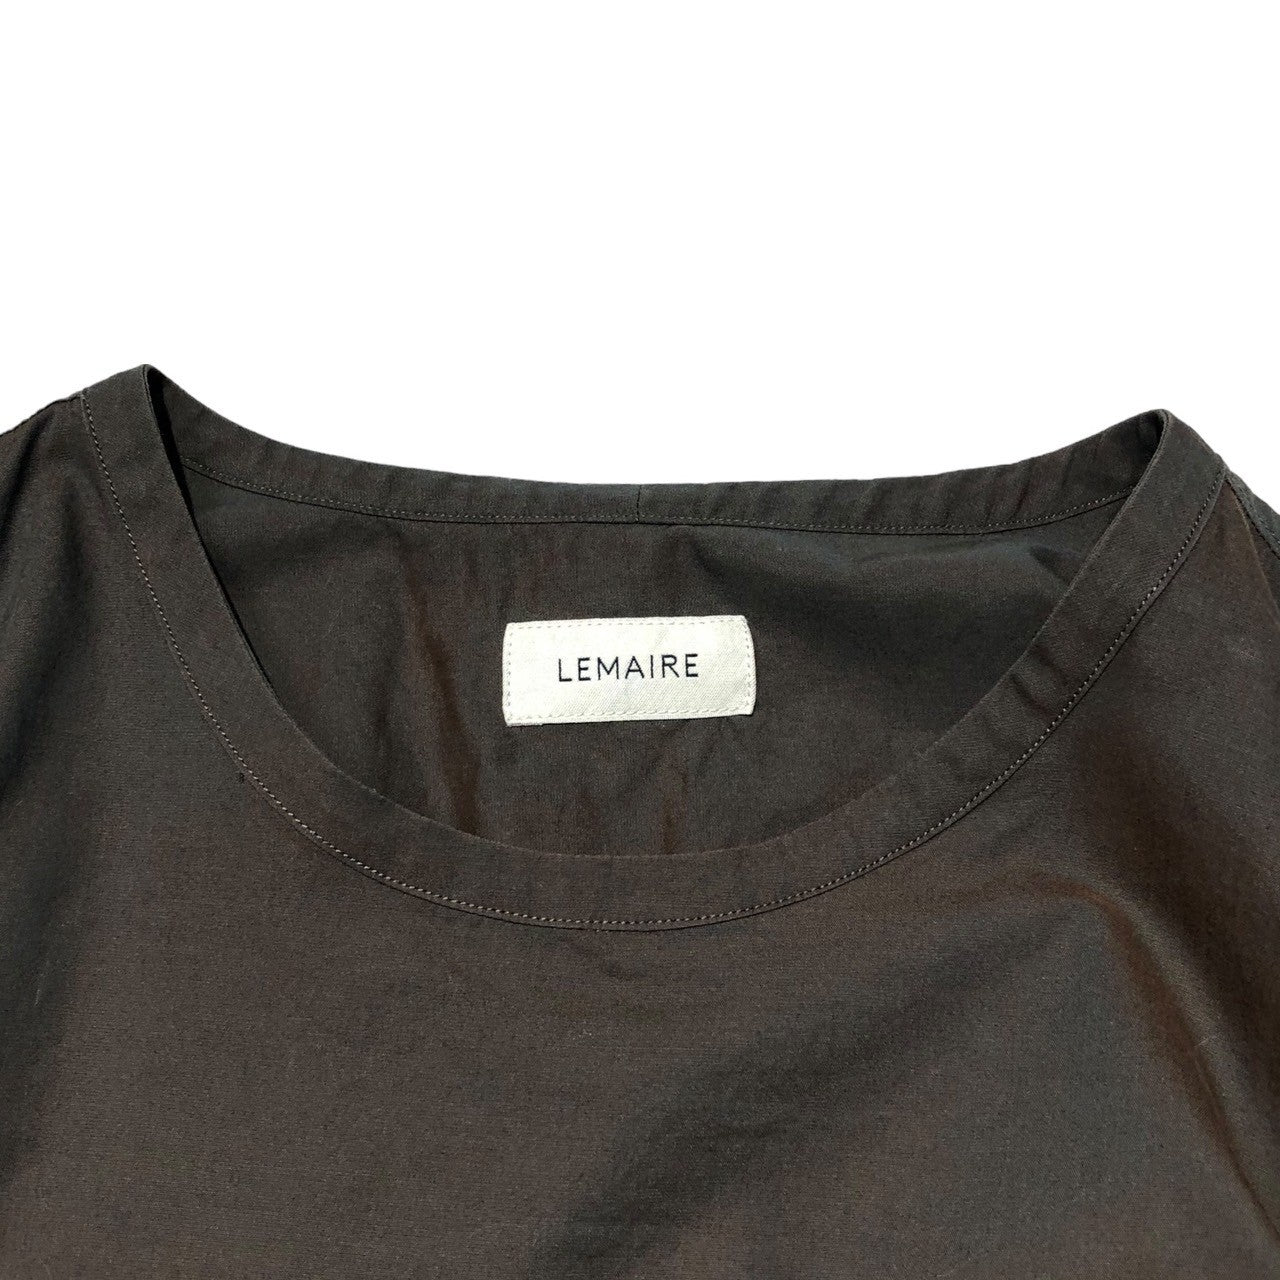 LEMAIRE(ルメール) collarless pullover shirt ノーカラープルオーバーシャツ M 183 TO121 LF276 M カーキ系